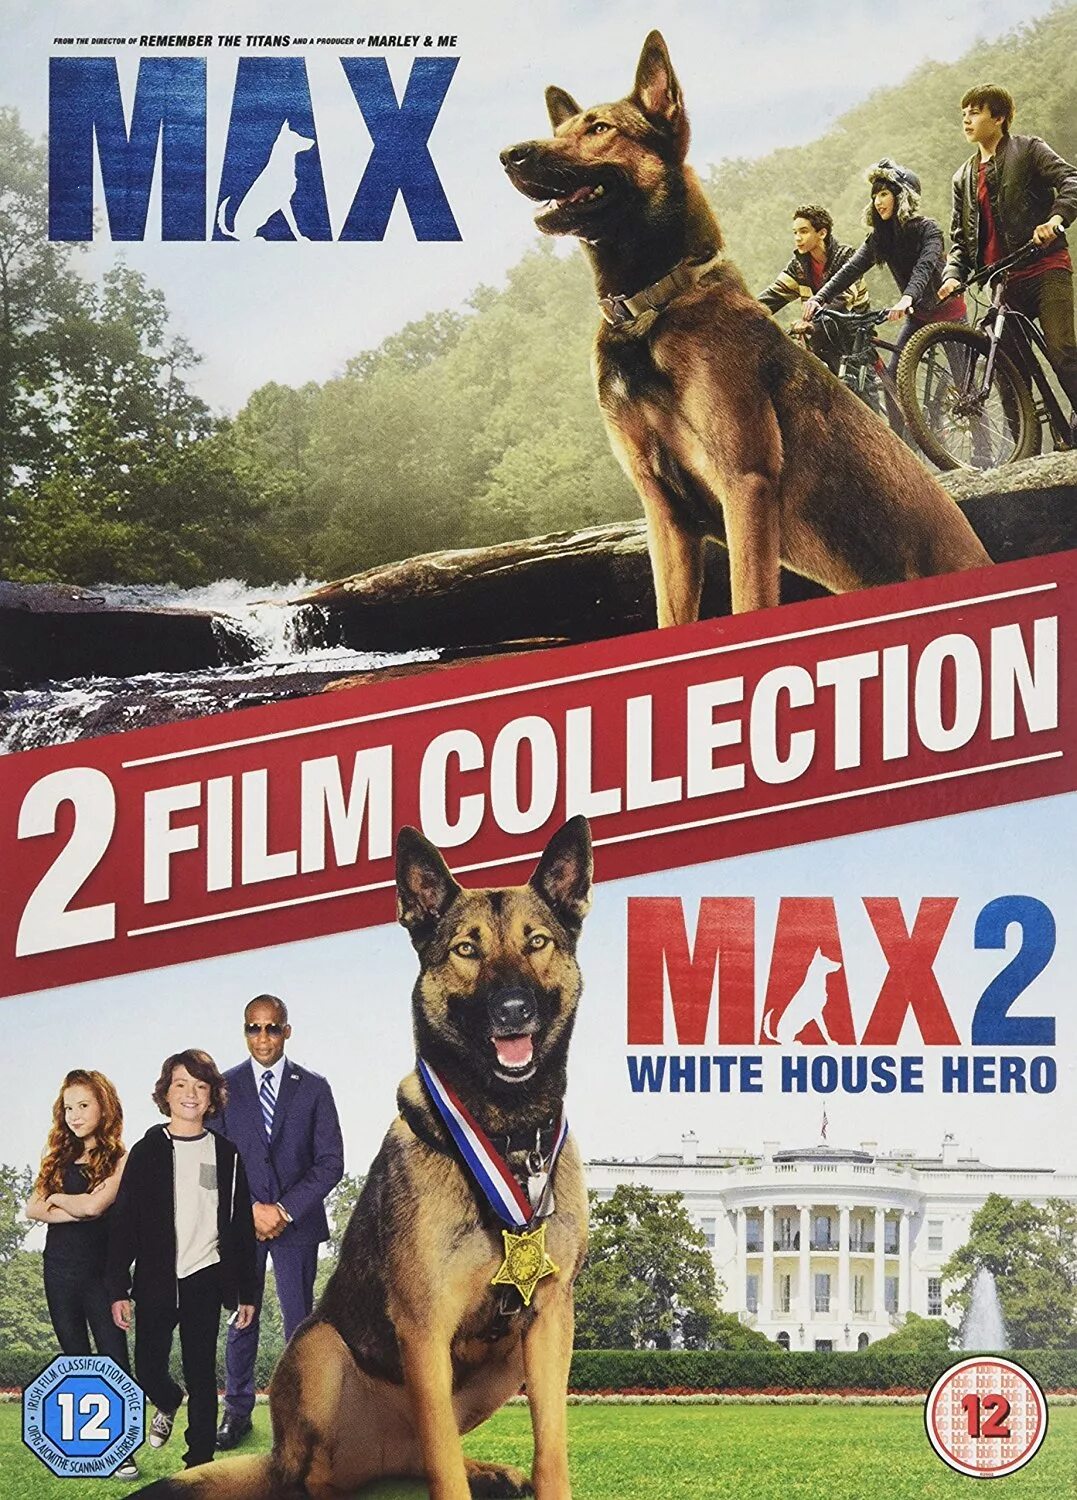 Max 2 White House Hero. Maks 2 герой. Max2 White House heroporno. Viva max films